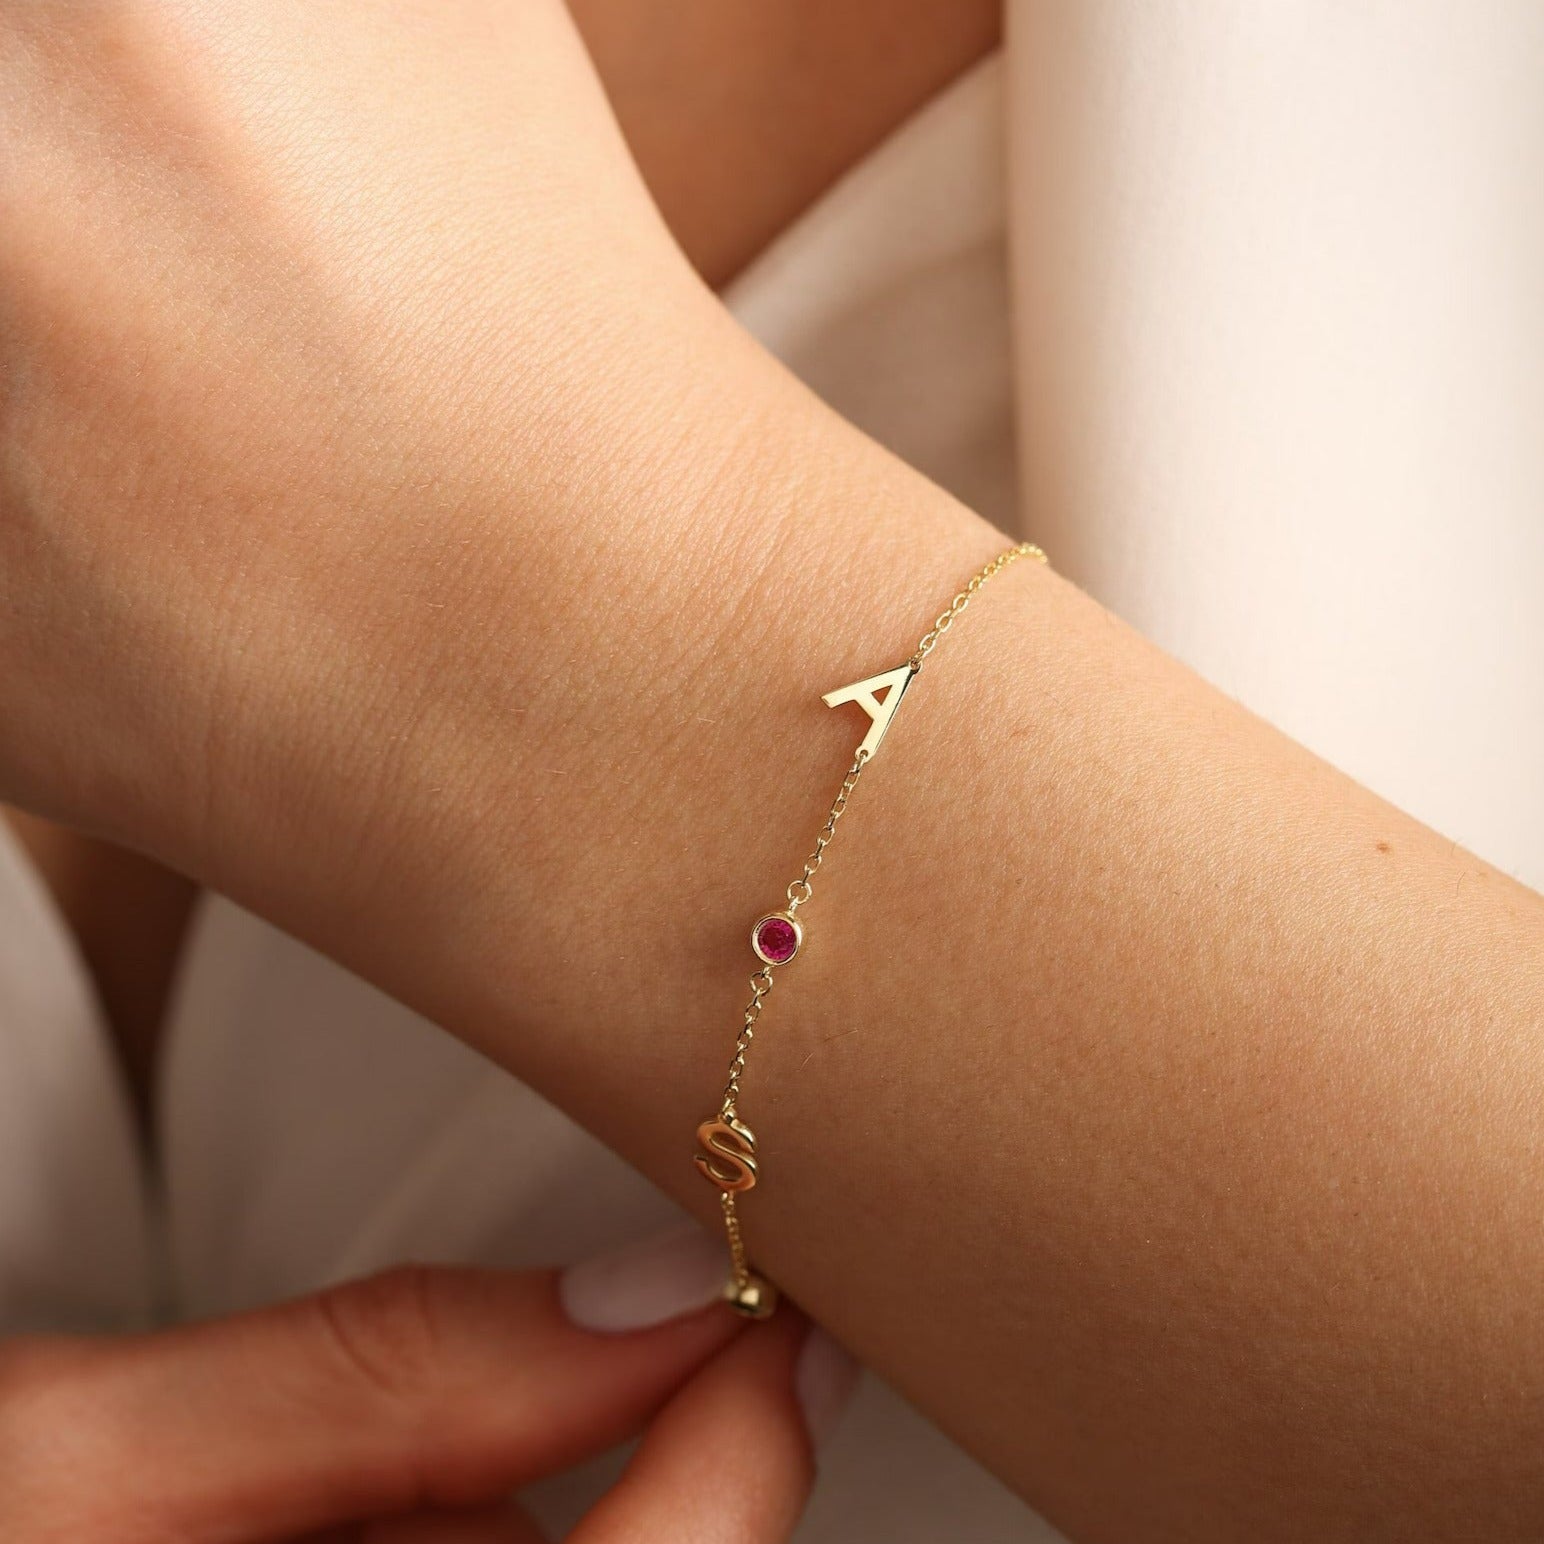 Two initial letter birthstone bracelet, anniversary gift for women, birthday gift for her. Handcrafted in Dubai, UAE.